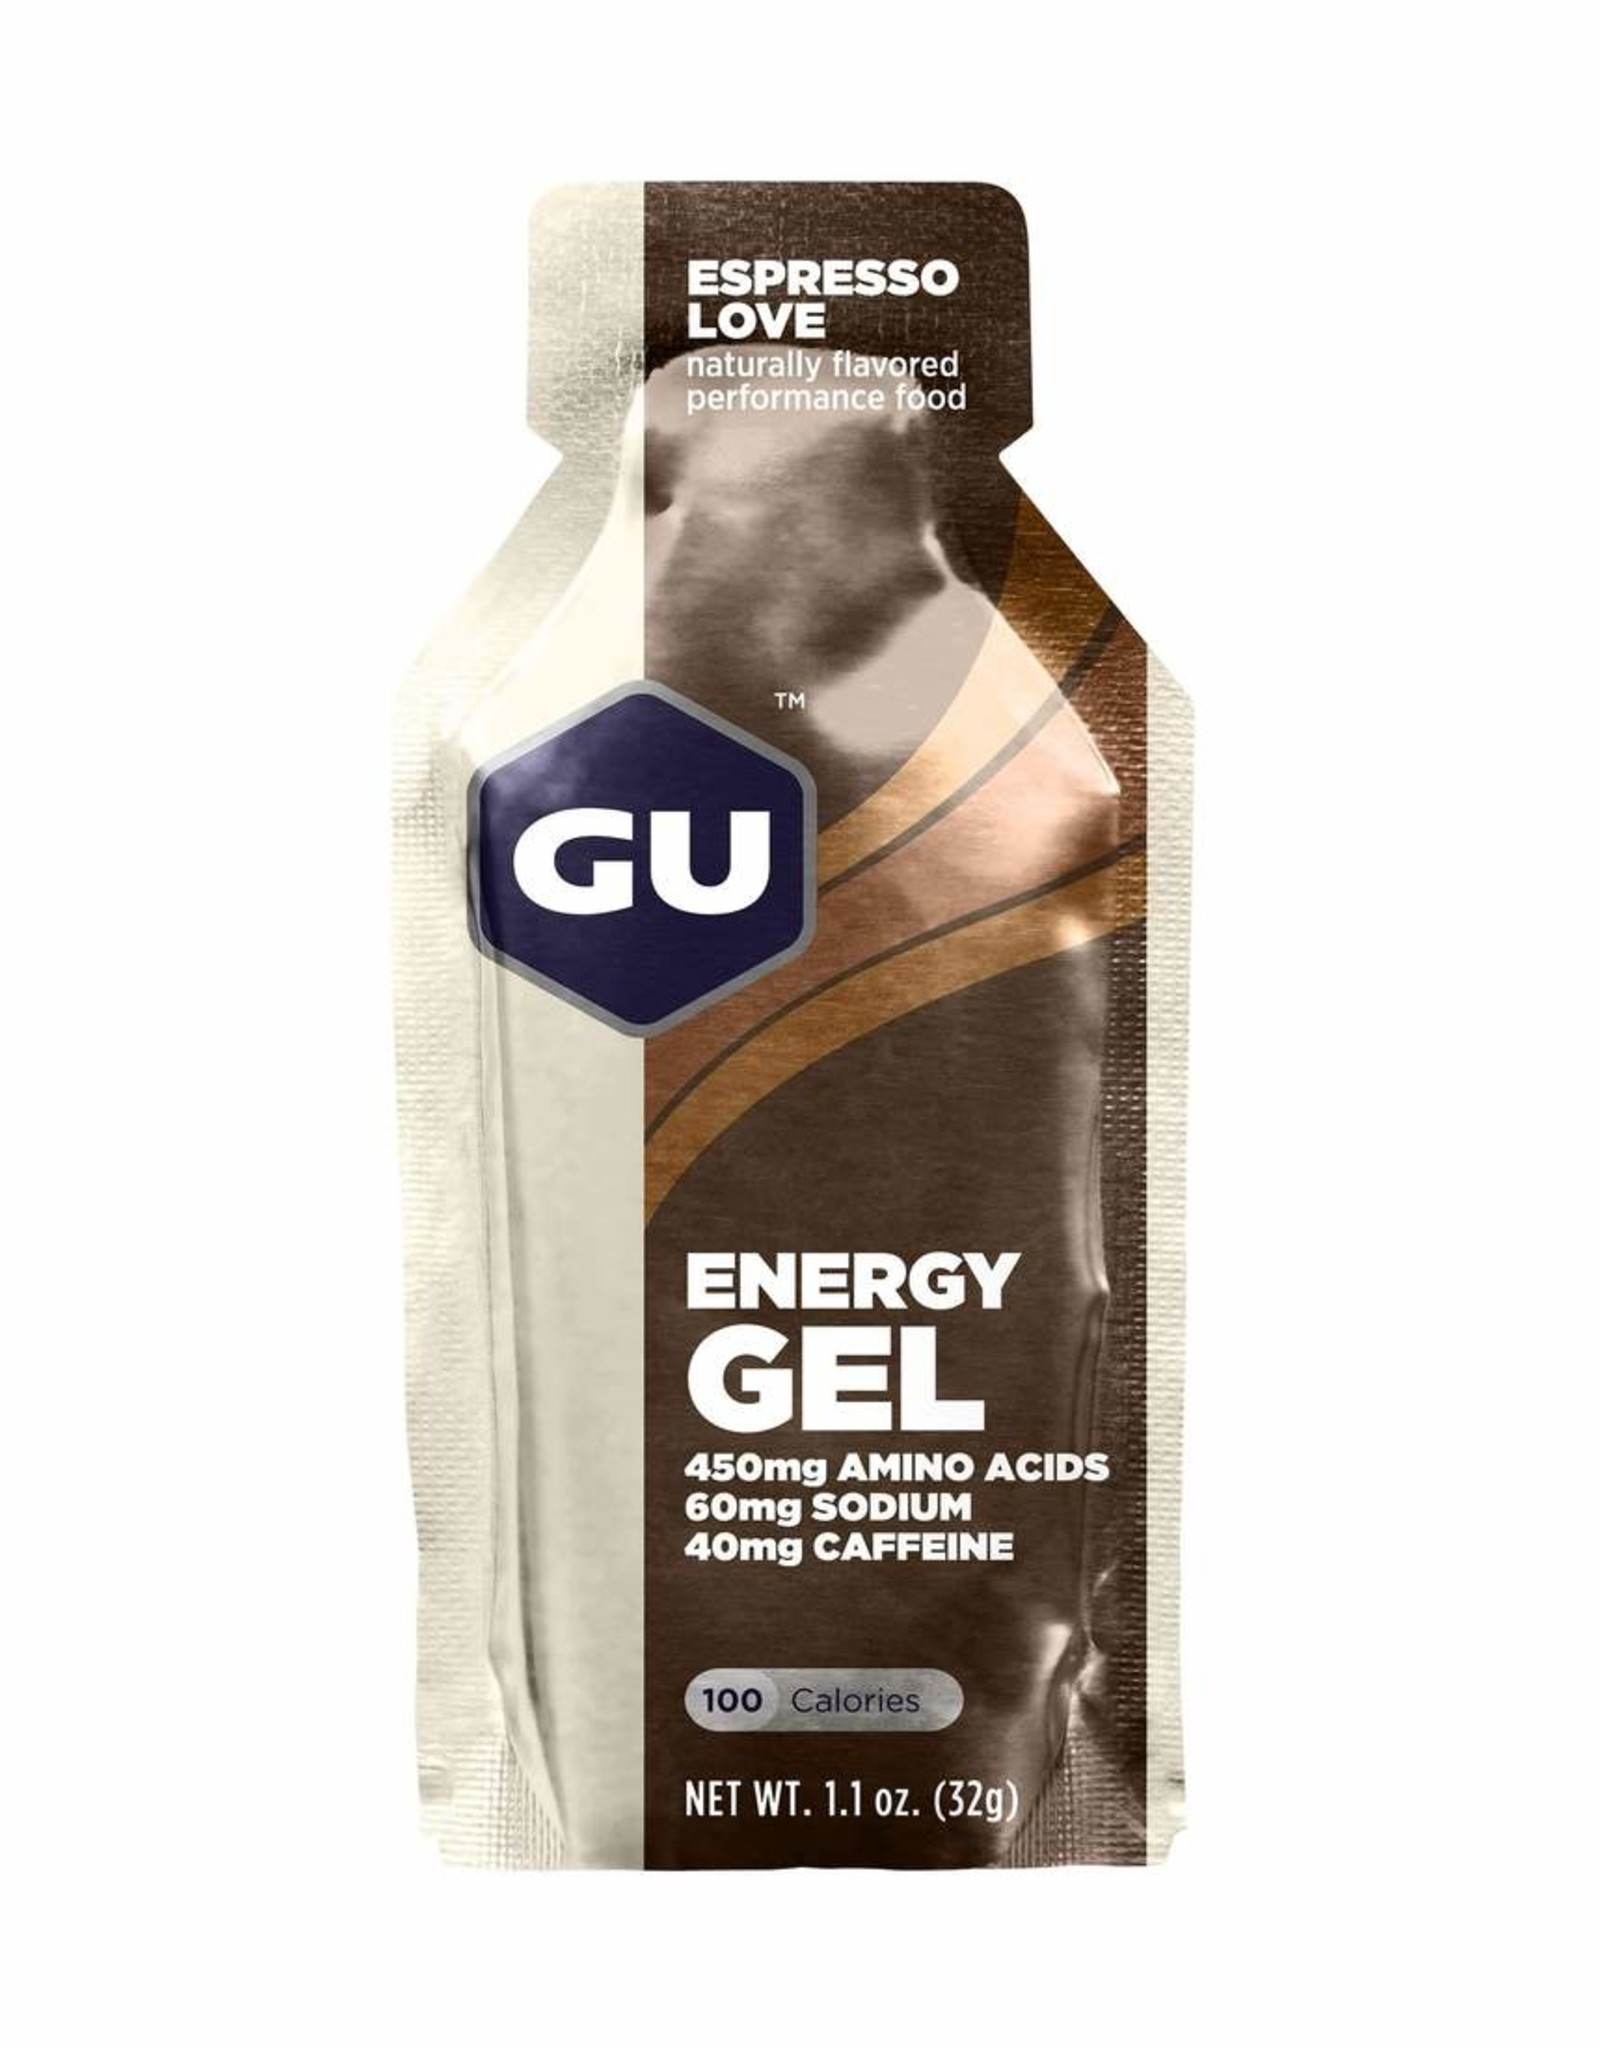 GU Energy Labs Espresso Love Gel single